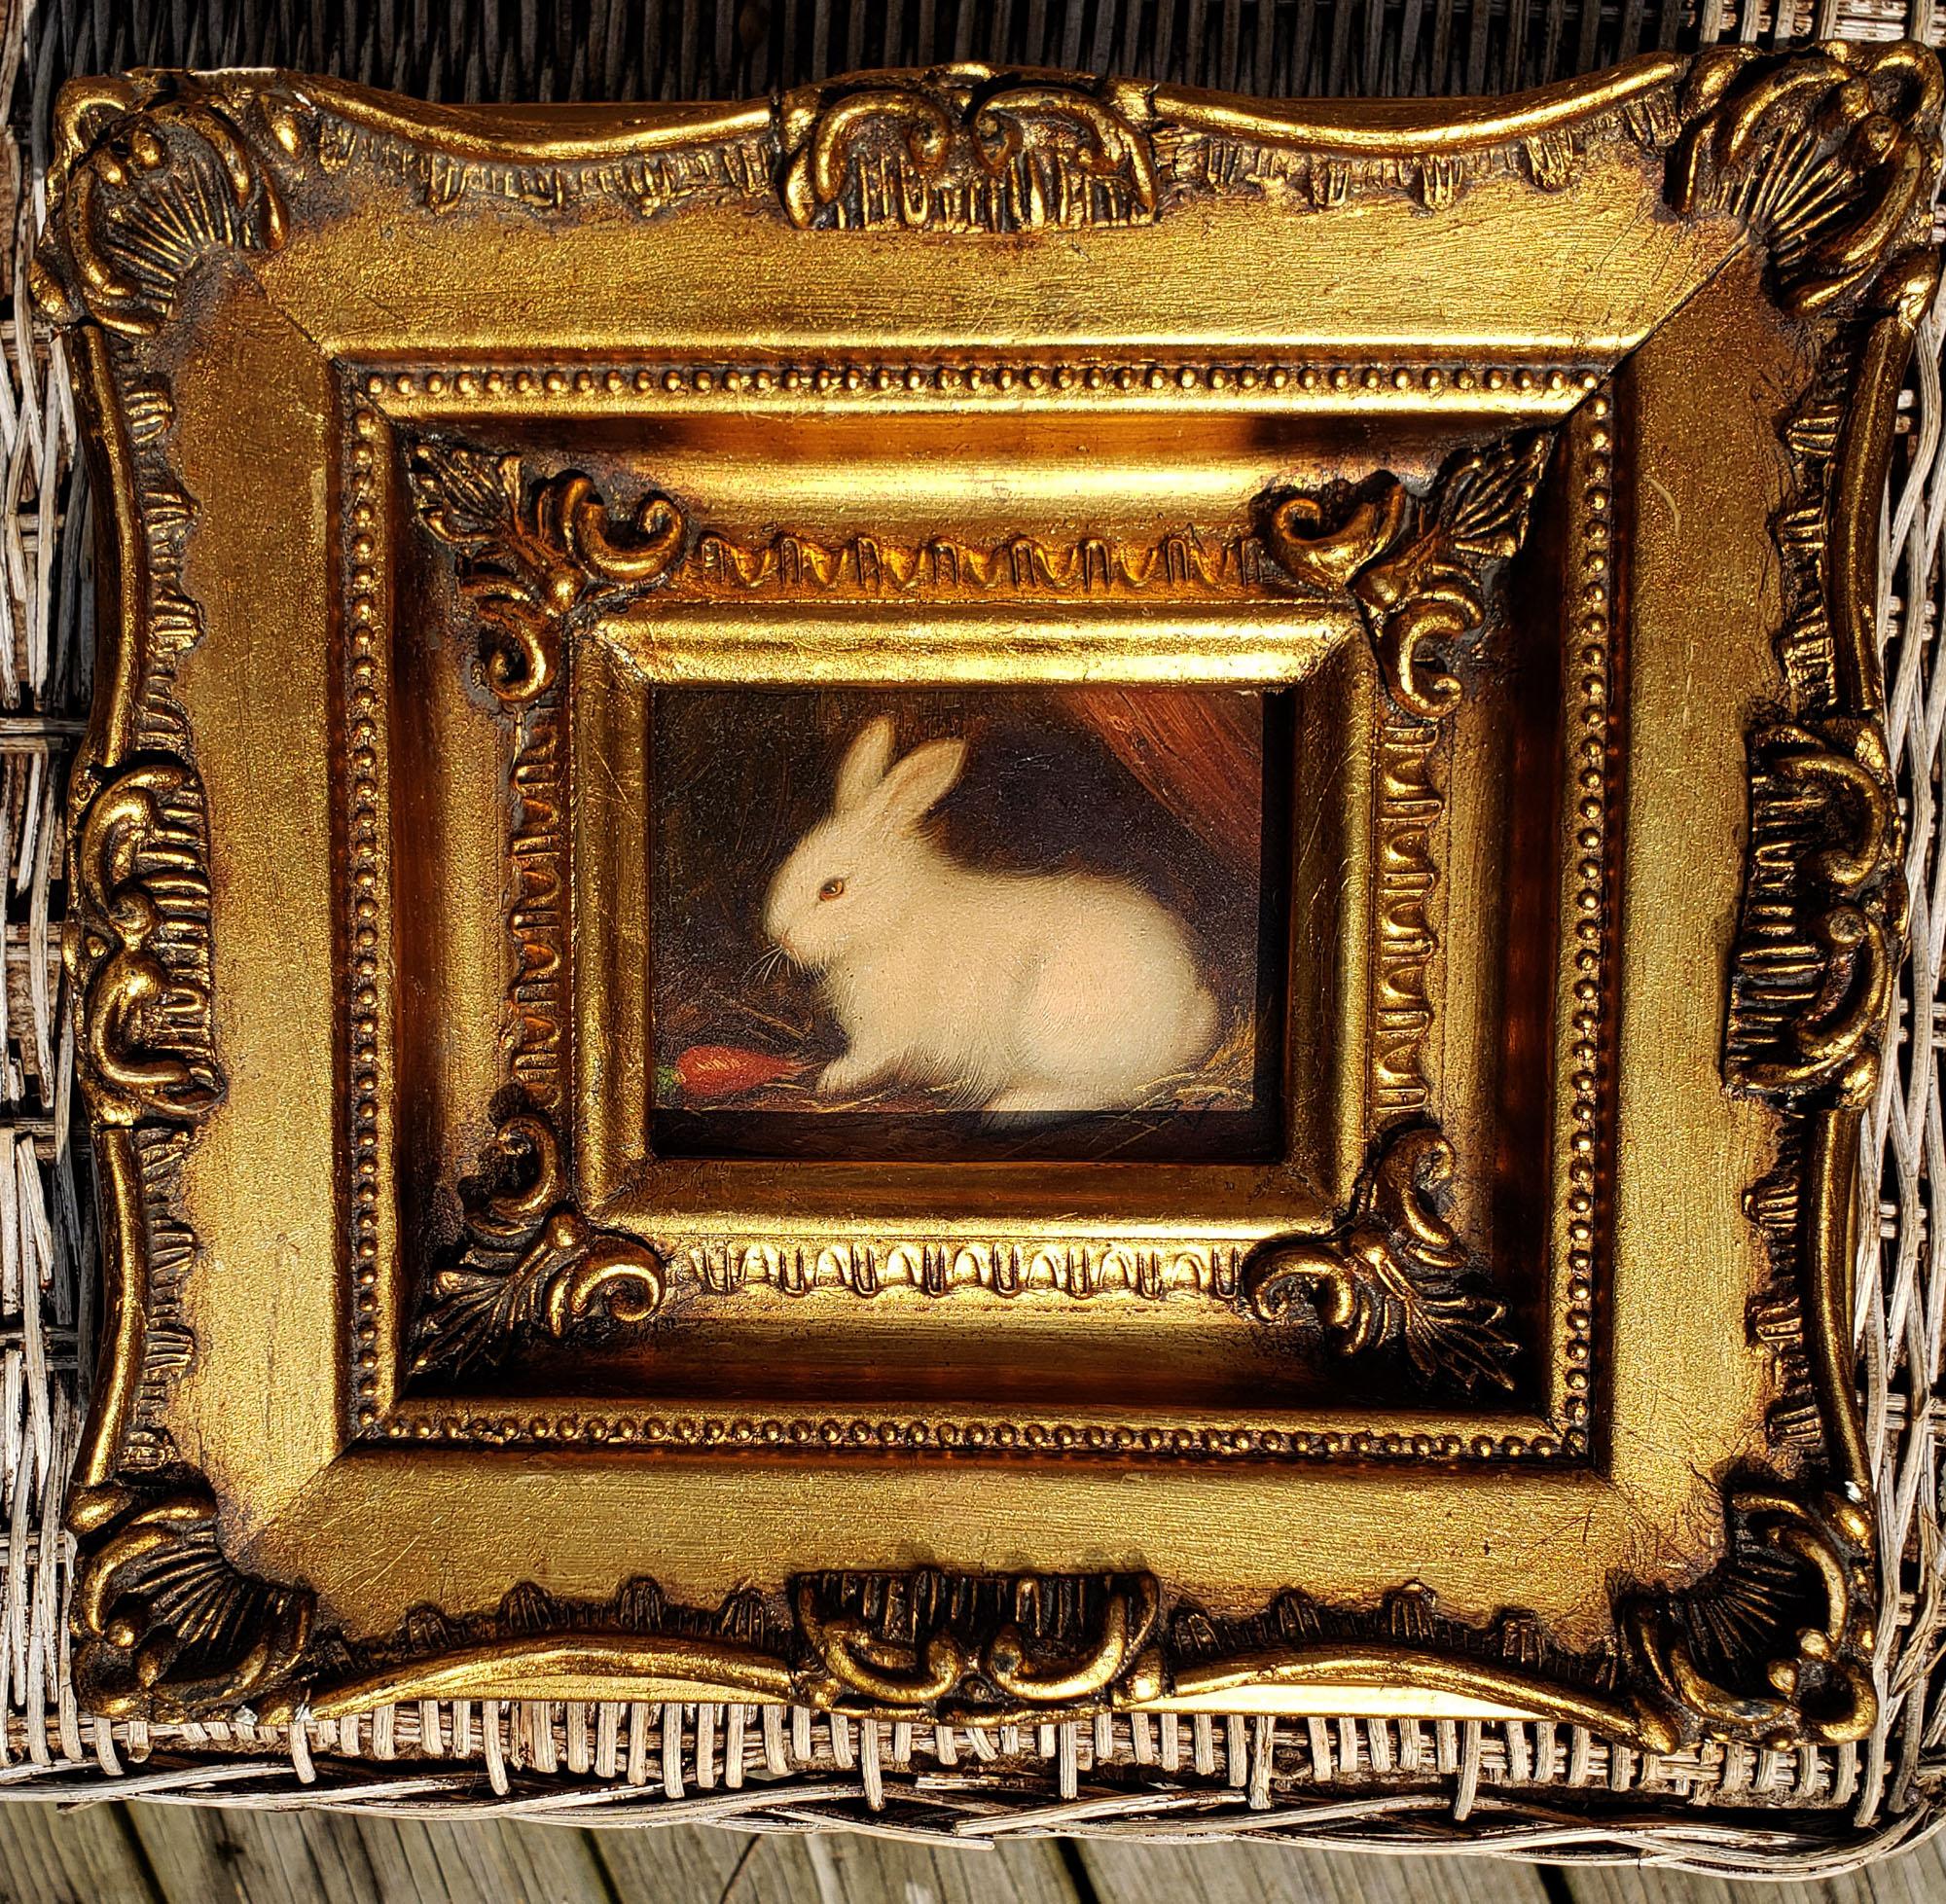 Miniaiture Paintings of Rabbits, a Pair 2